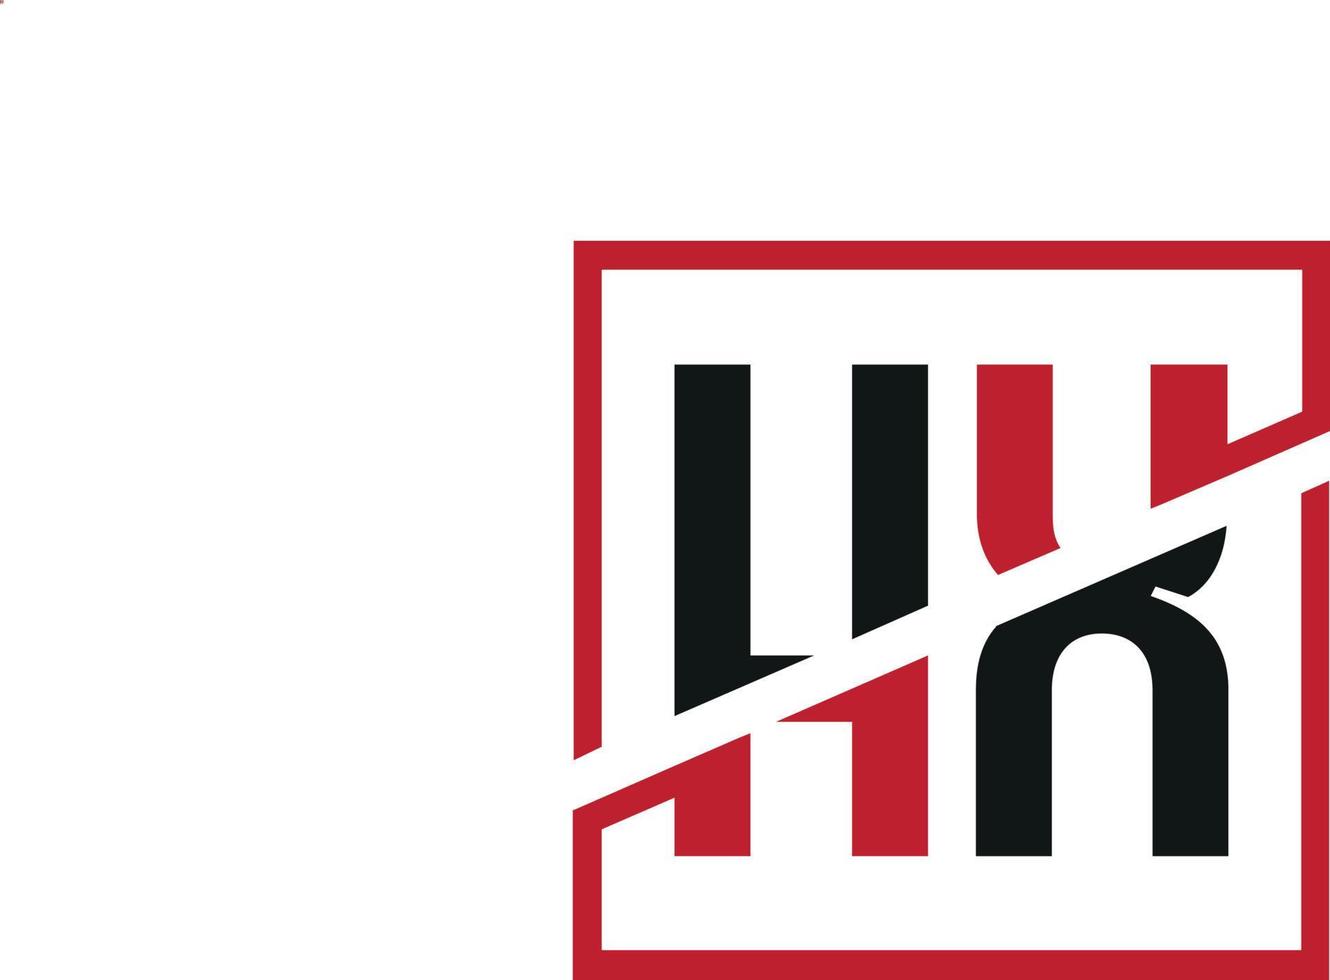 HX logo design. Initial HX letter logo monogram design in black and red color with square shape. Pro vector